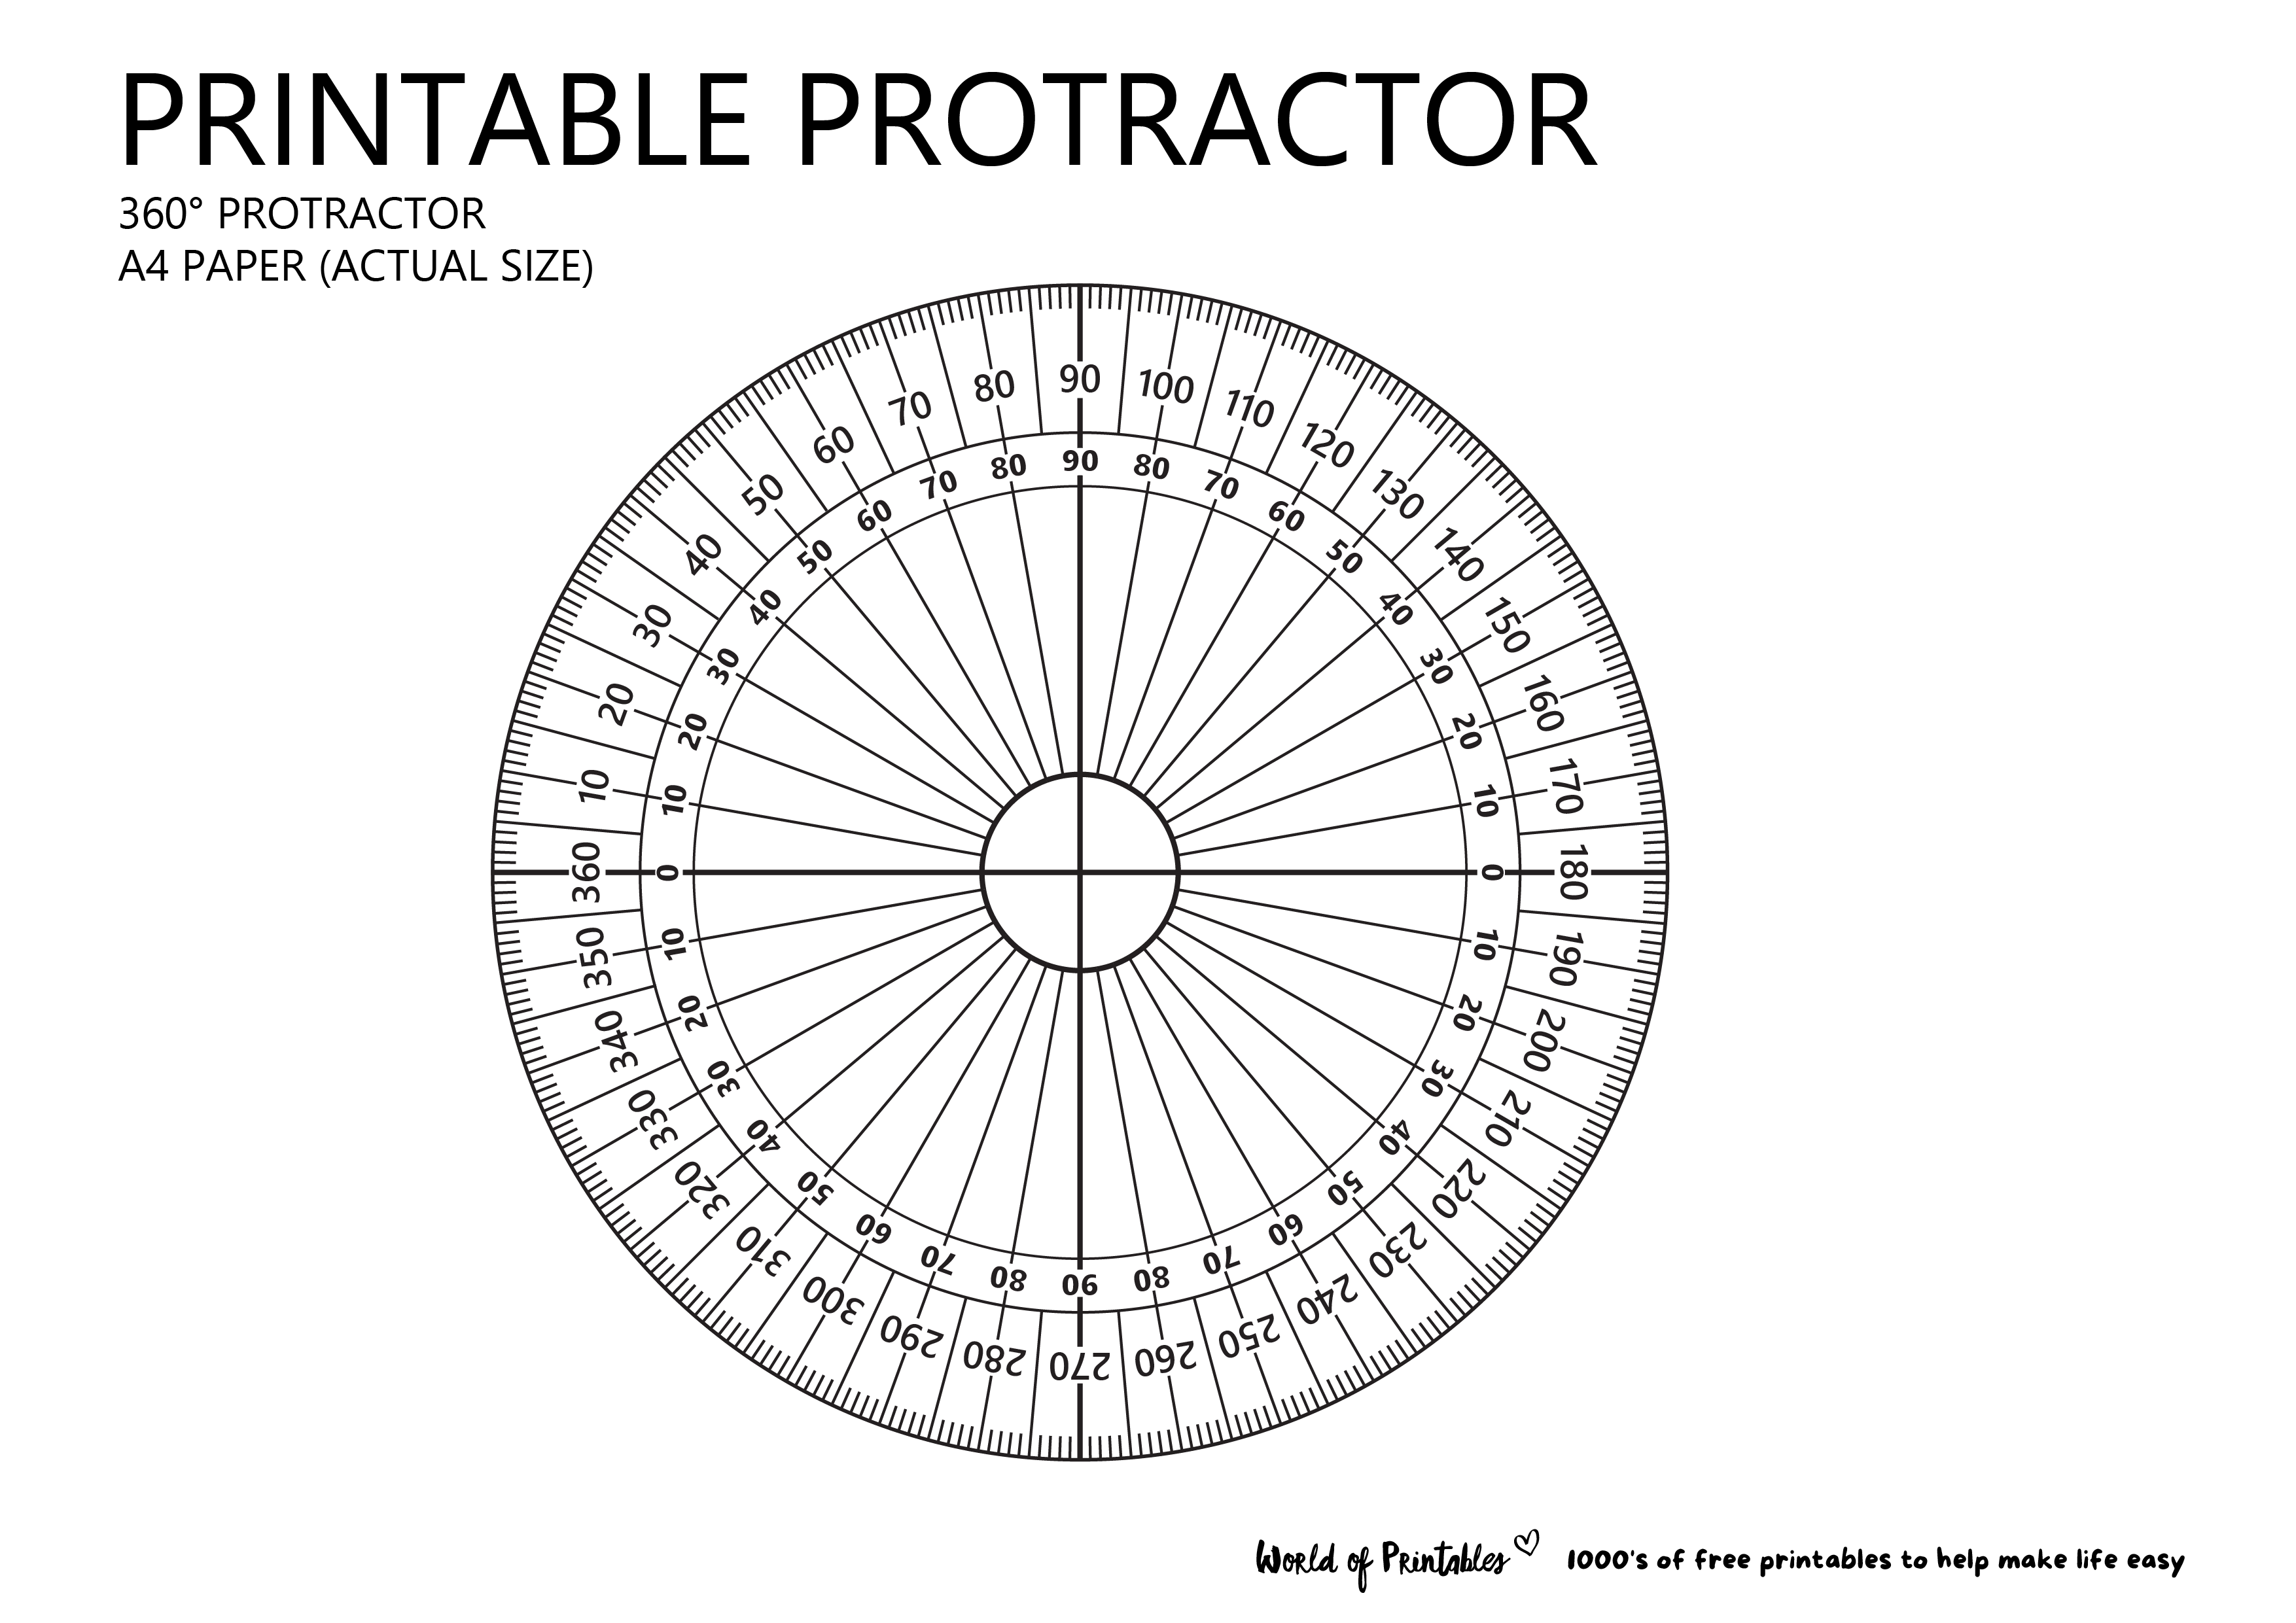 Printable protractor